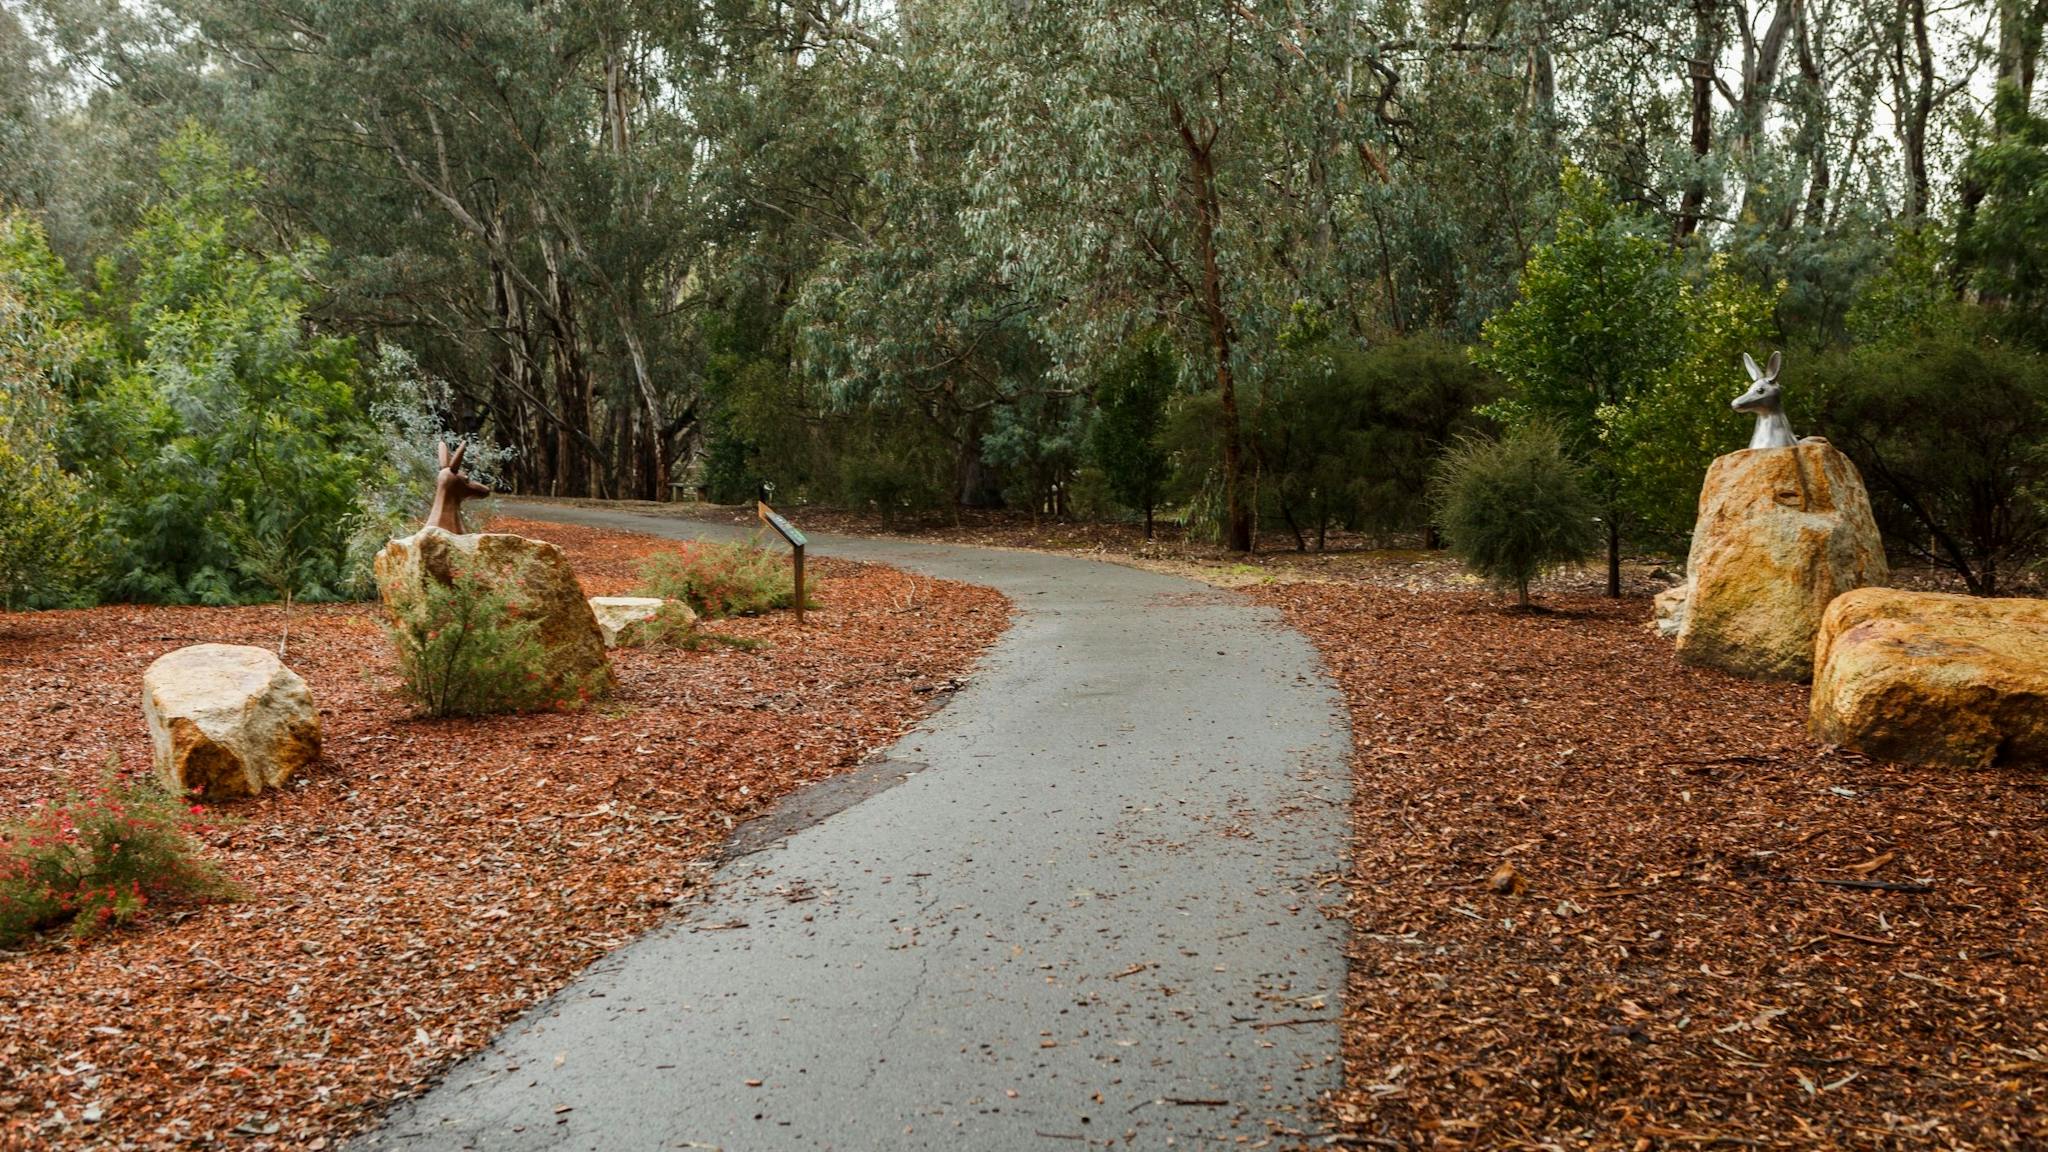 Path, bark chip along edges, rocks, kangaroo head sculptures, trees.